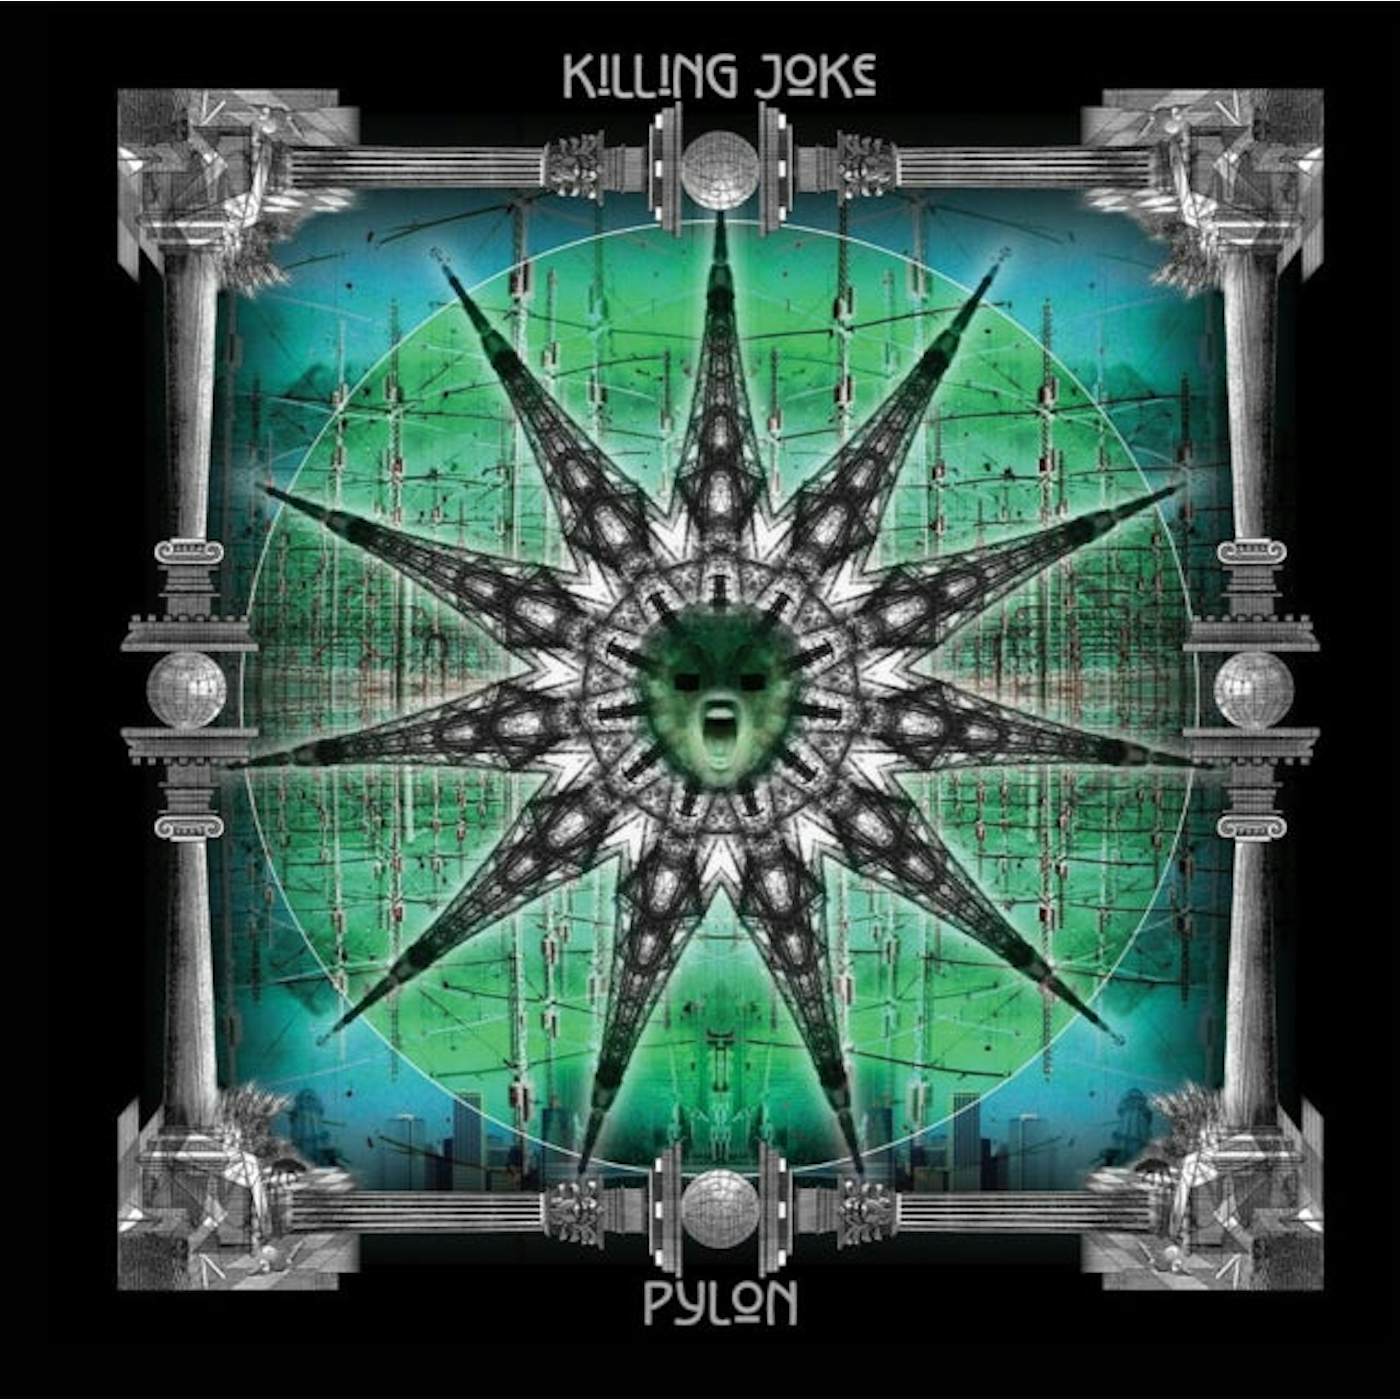 Killing Joke LP Vinyl Record - Pylon (Green Vinyl)